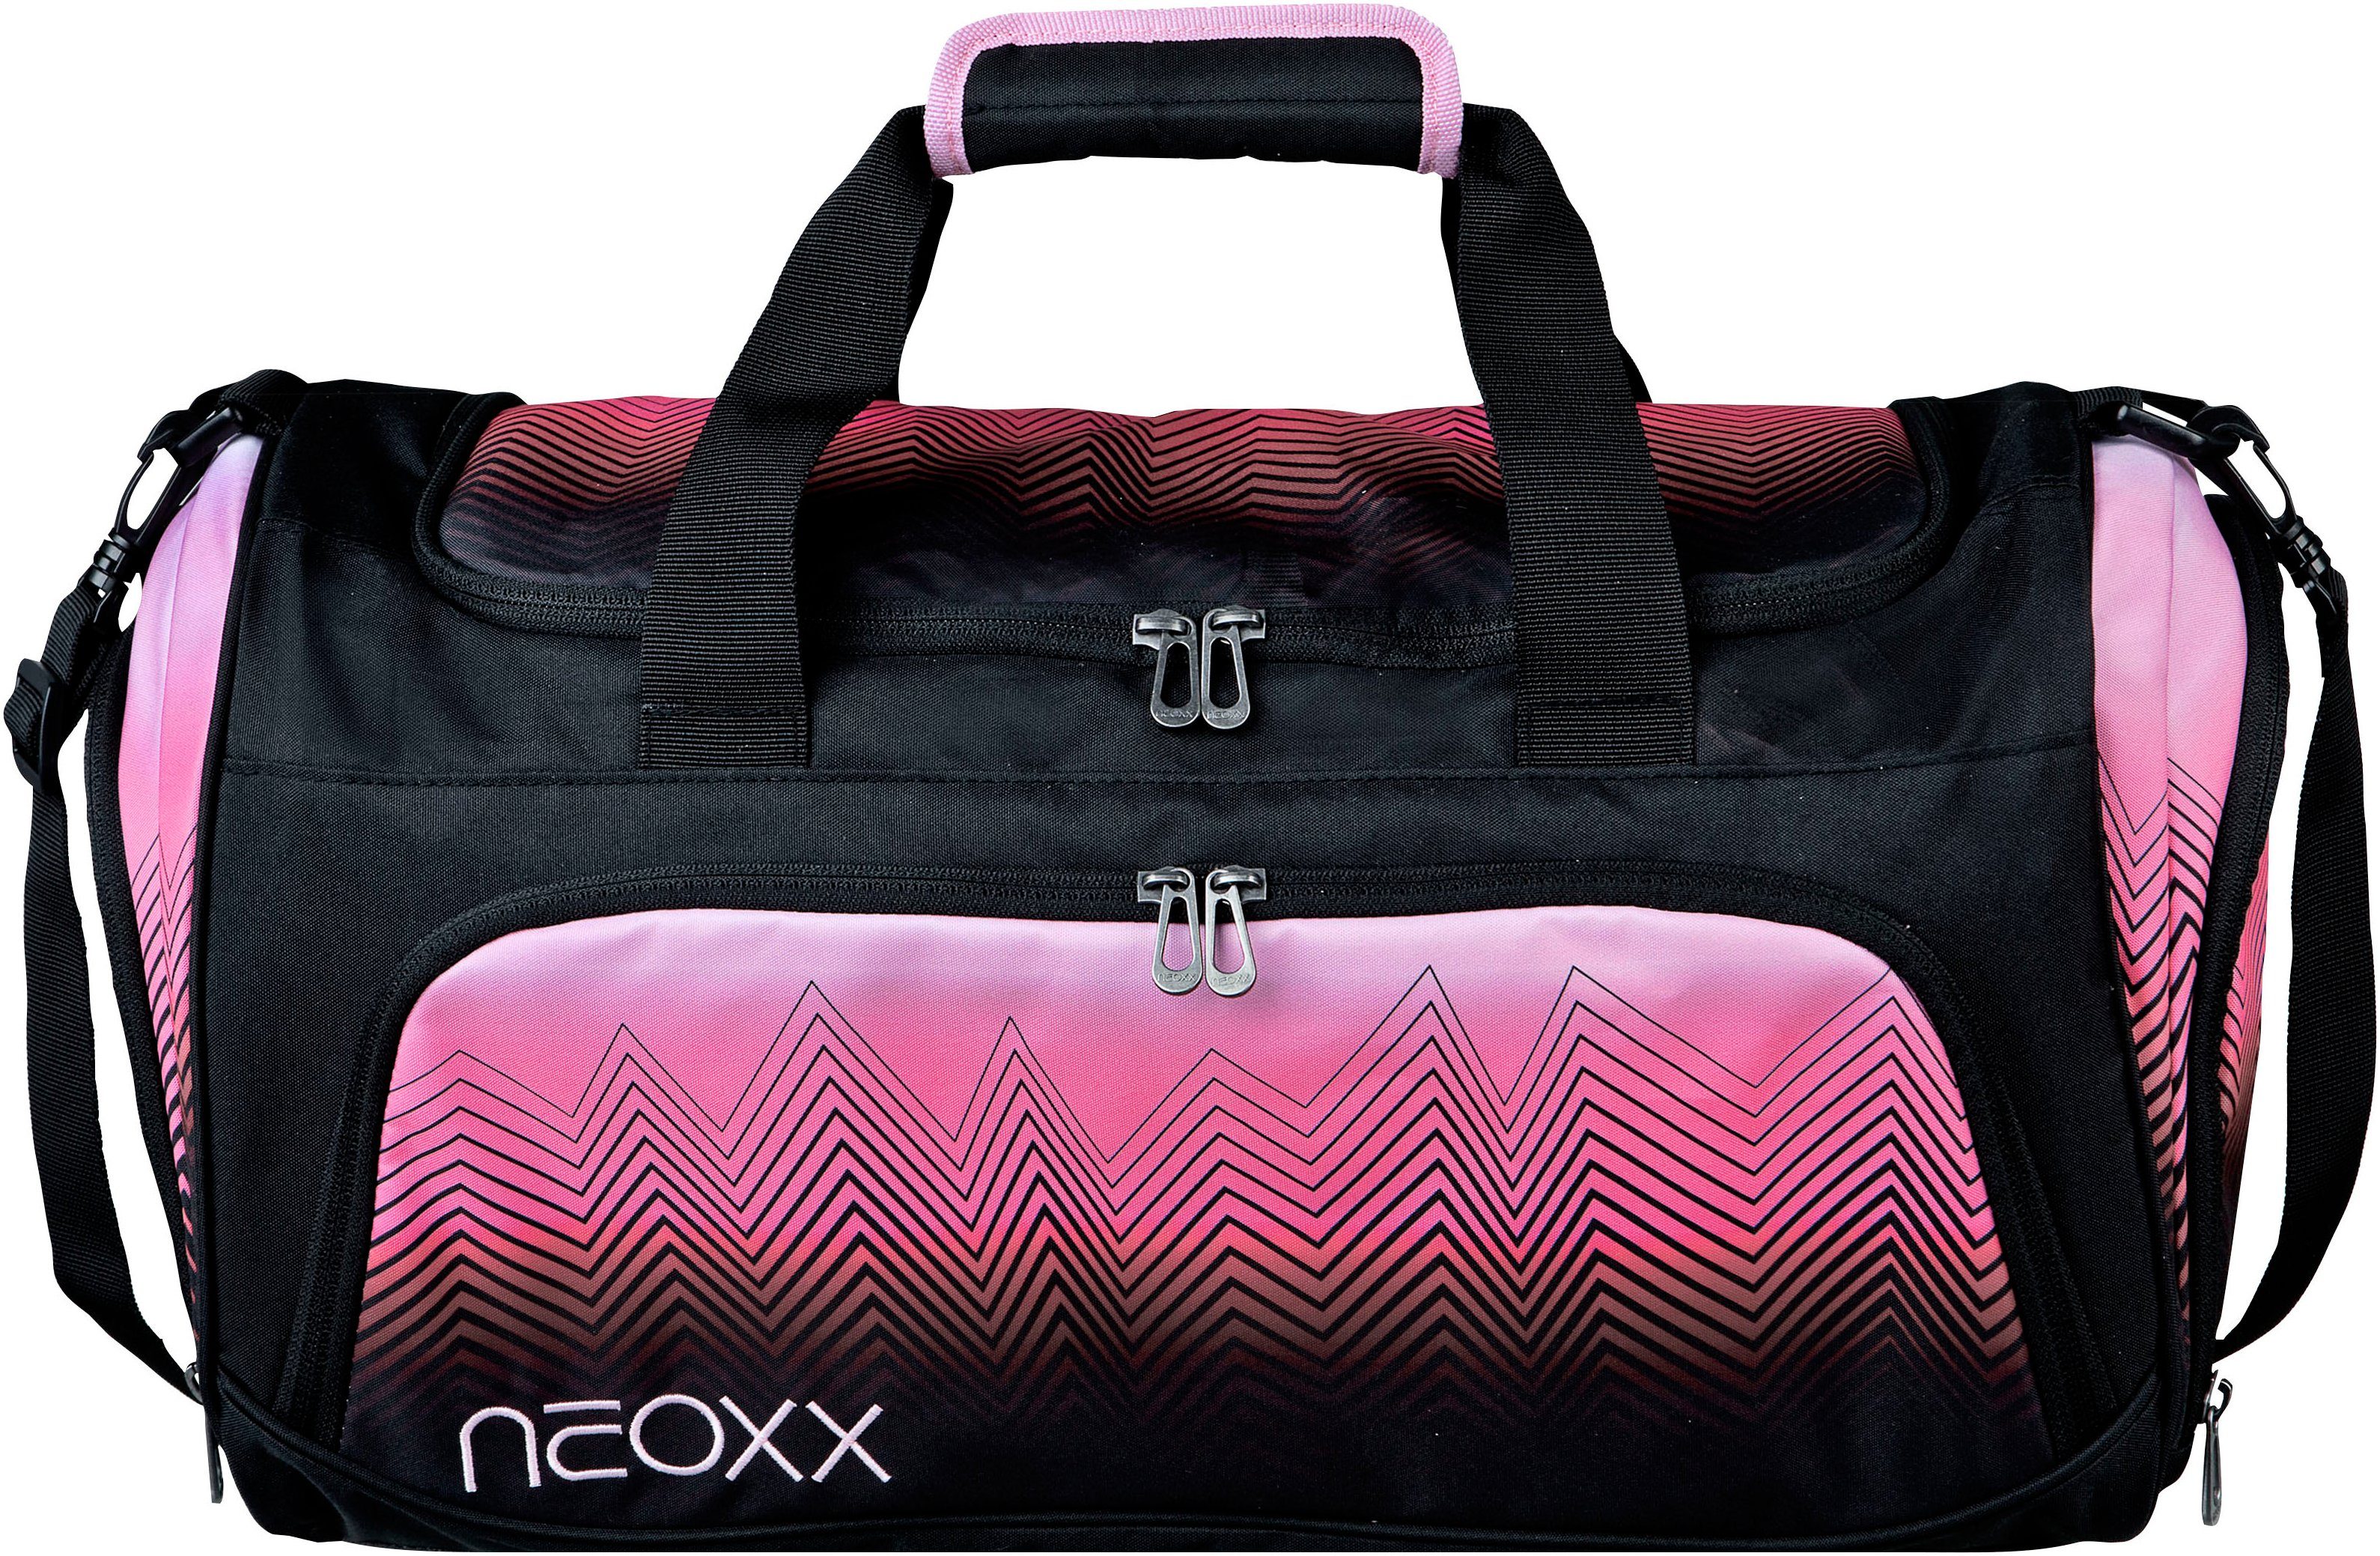 neoxx Sporttasche Move, Sweet like Sunset, teilweise aus recyceltem Material